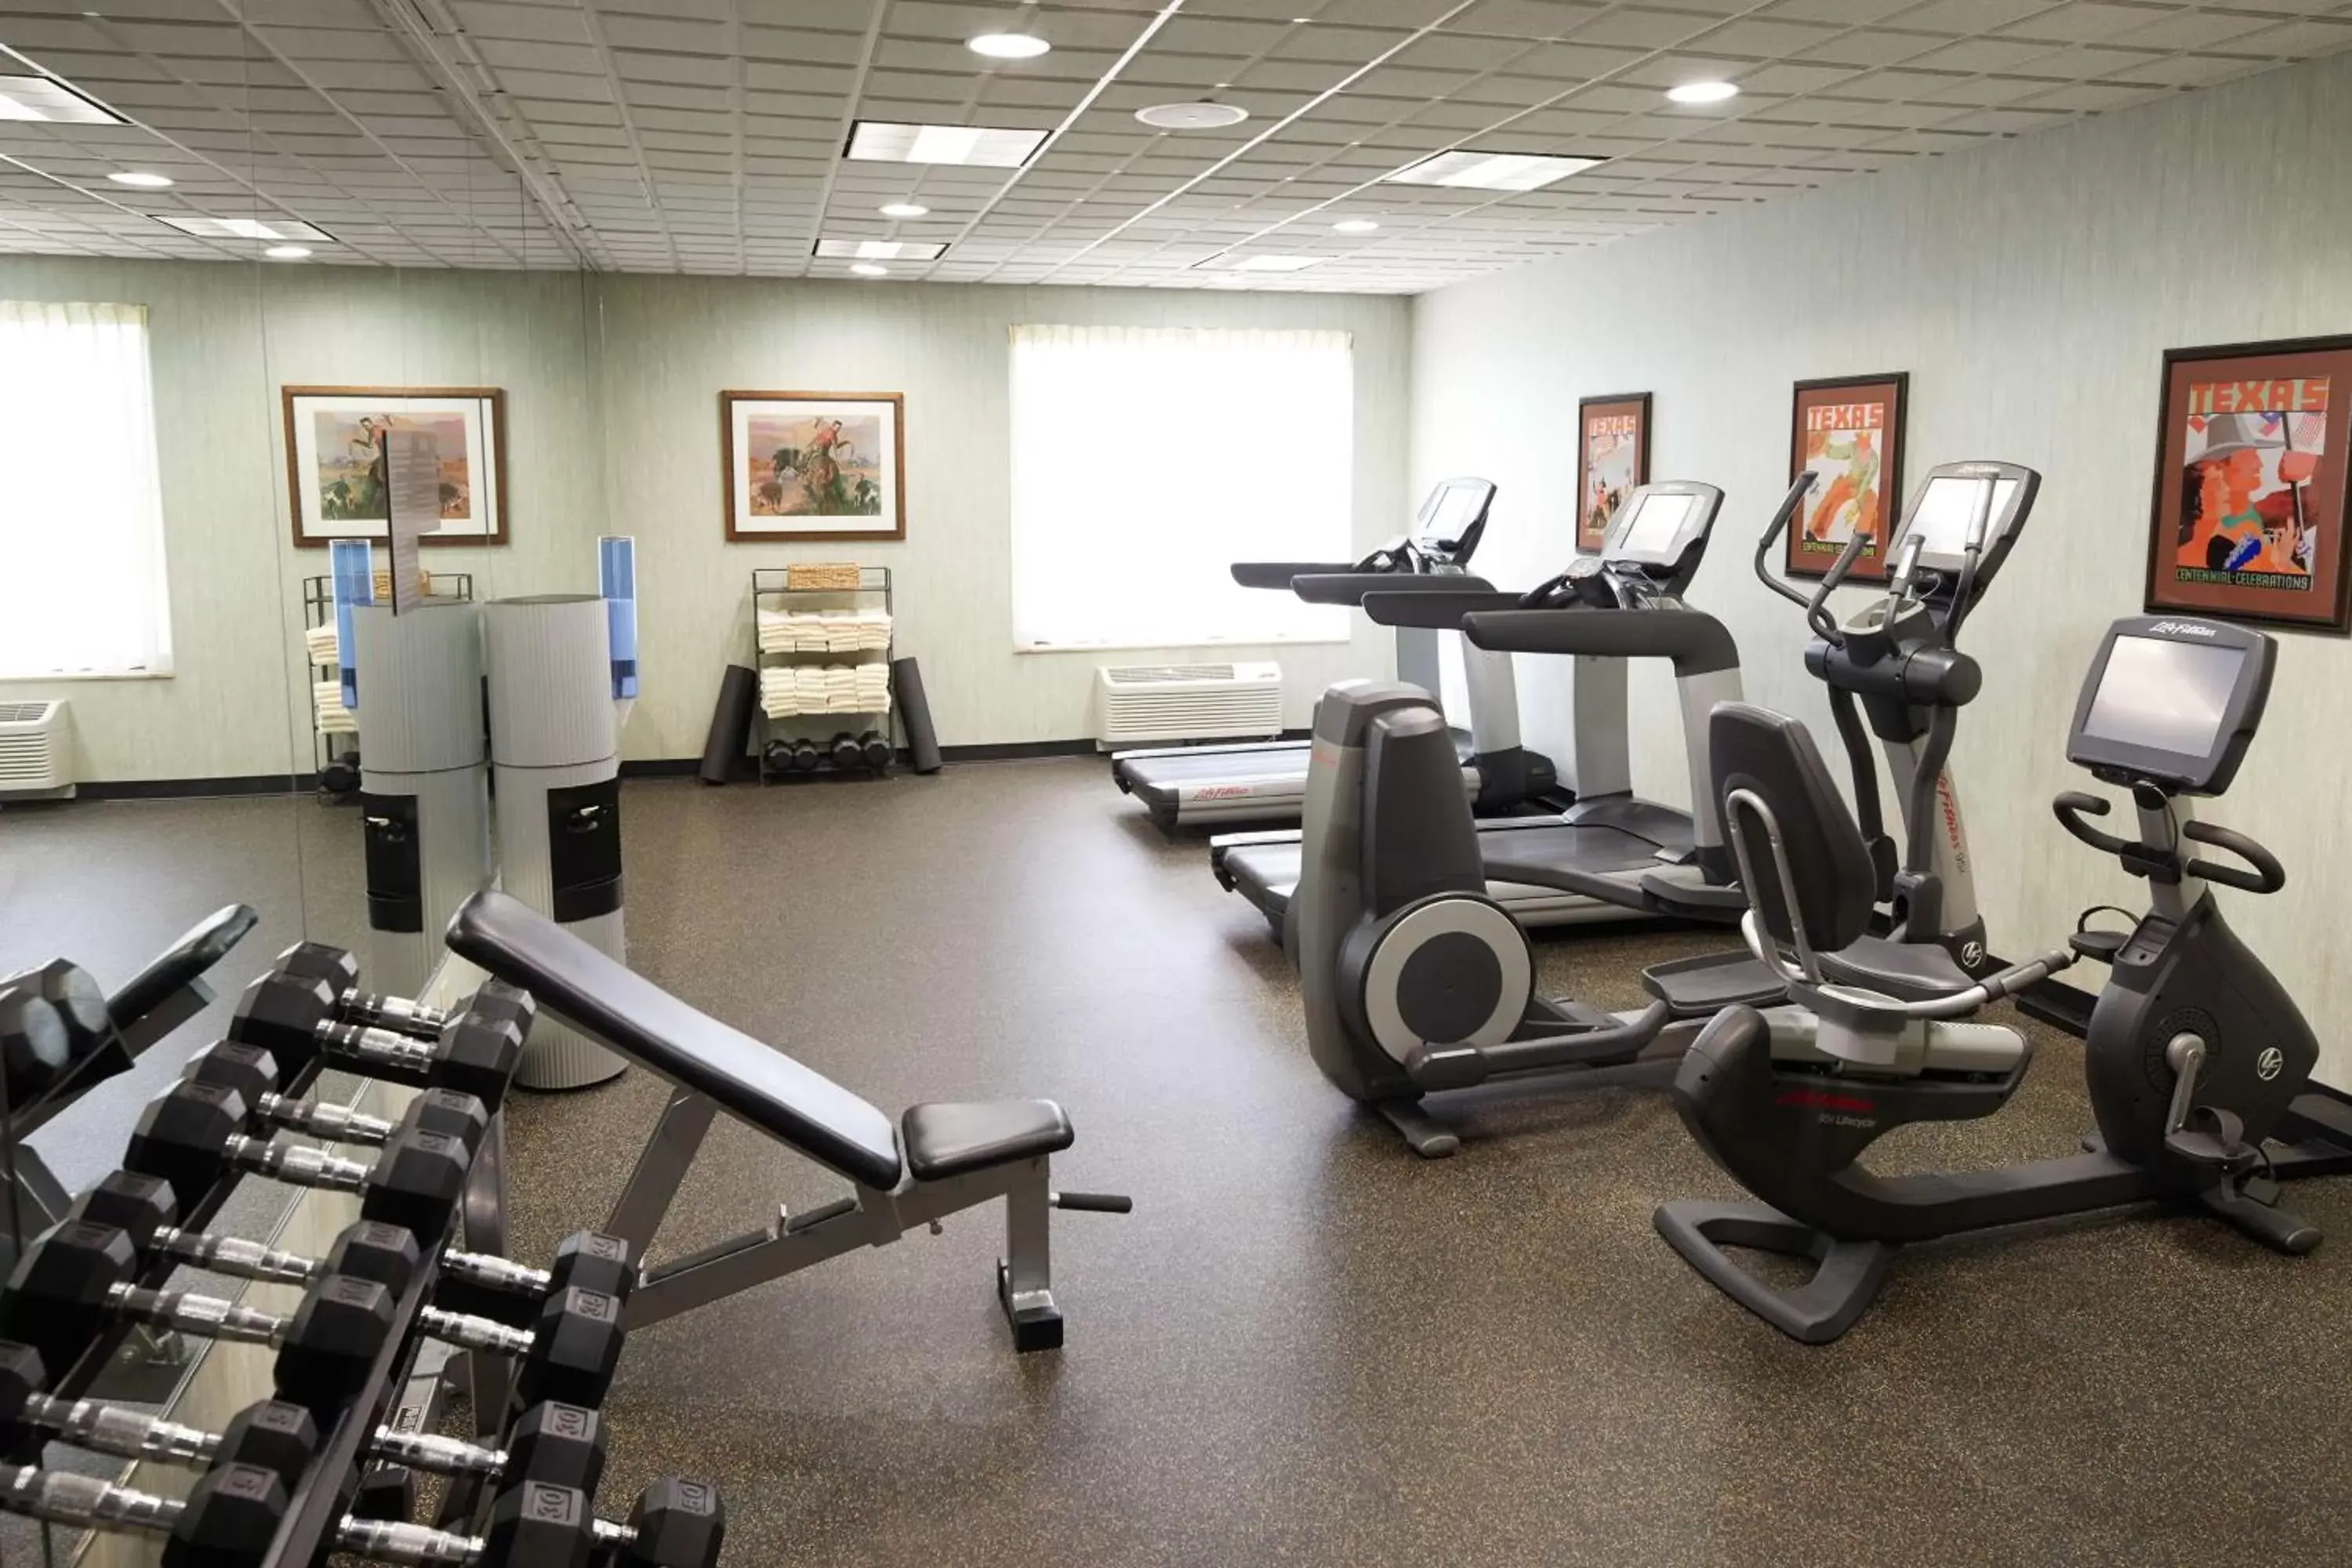 Fitness centre/facilities, Fitness Center/Facilities in Hyatt Place Fort Worth Stockyard